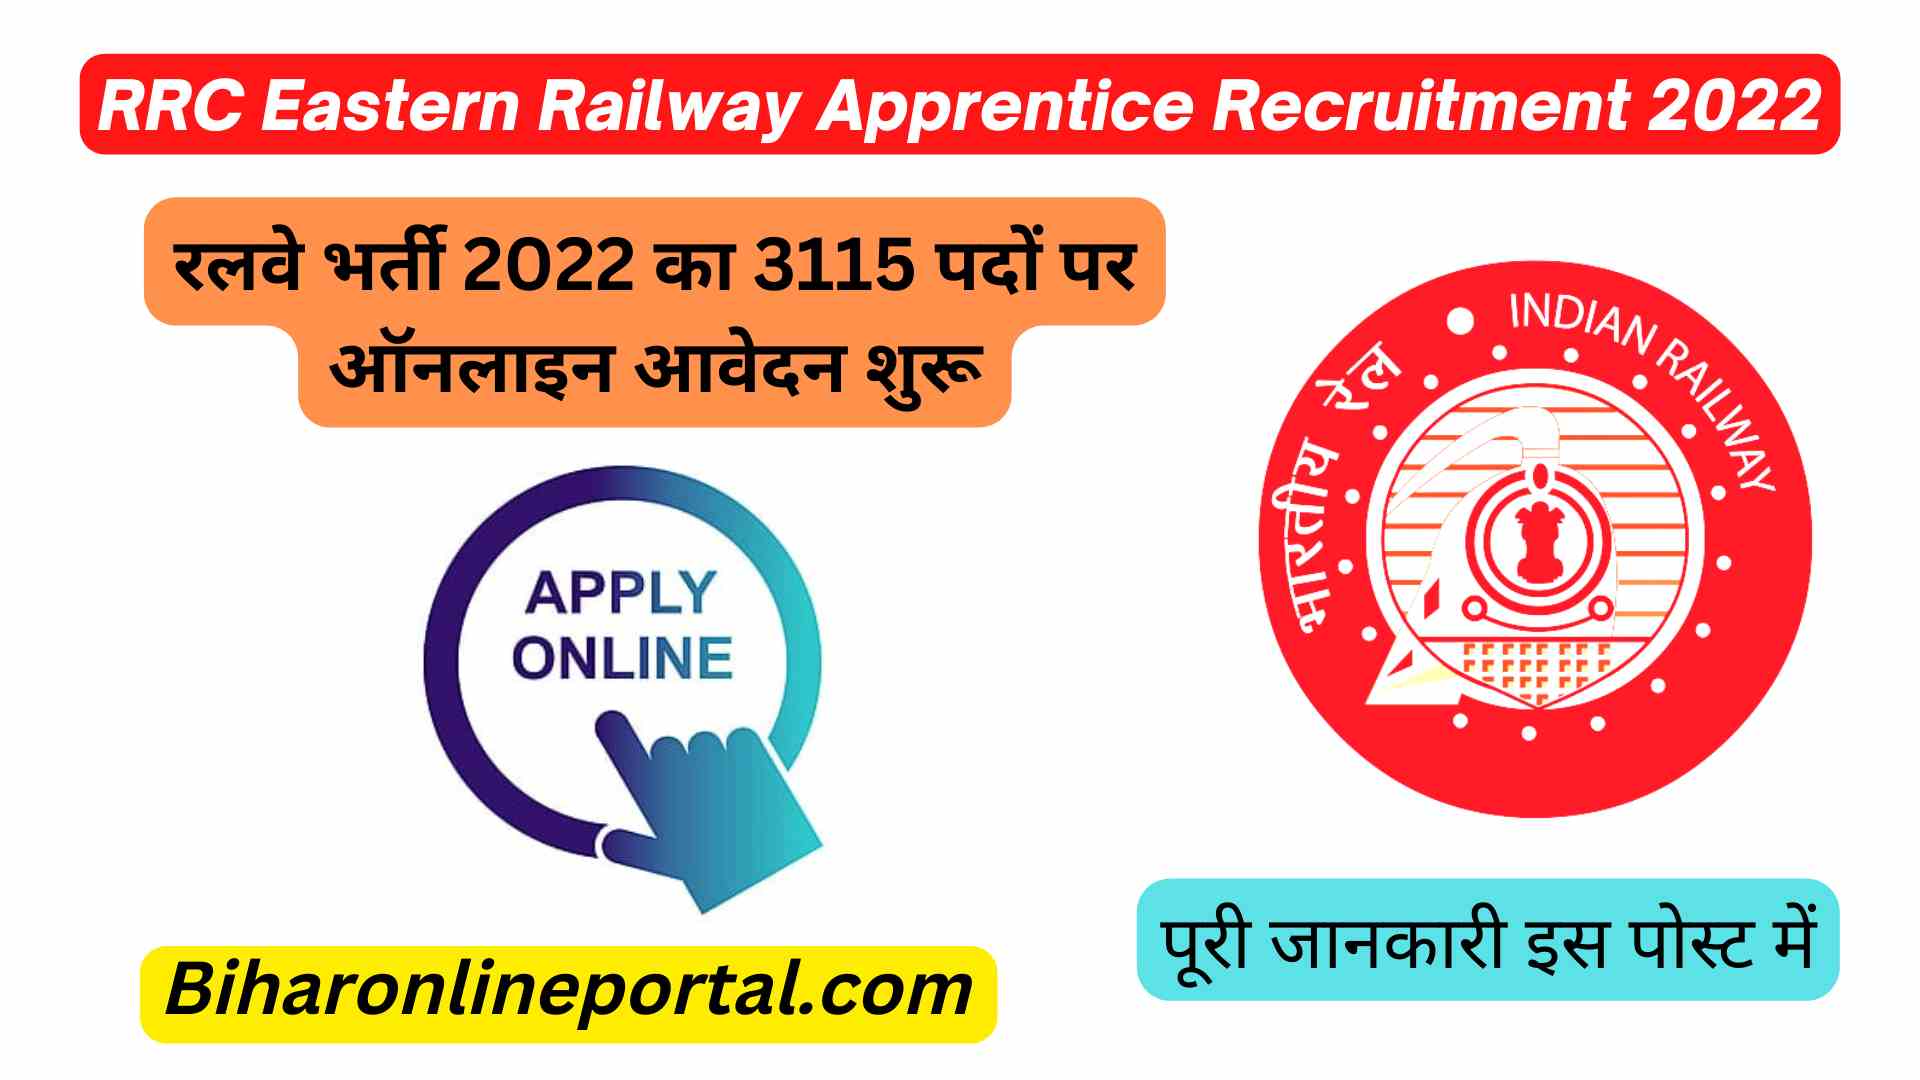 RRC Eastern Railway Apprentice Recruitment